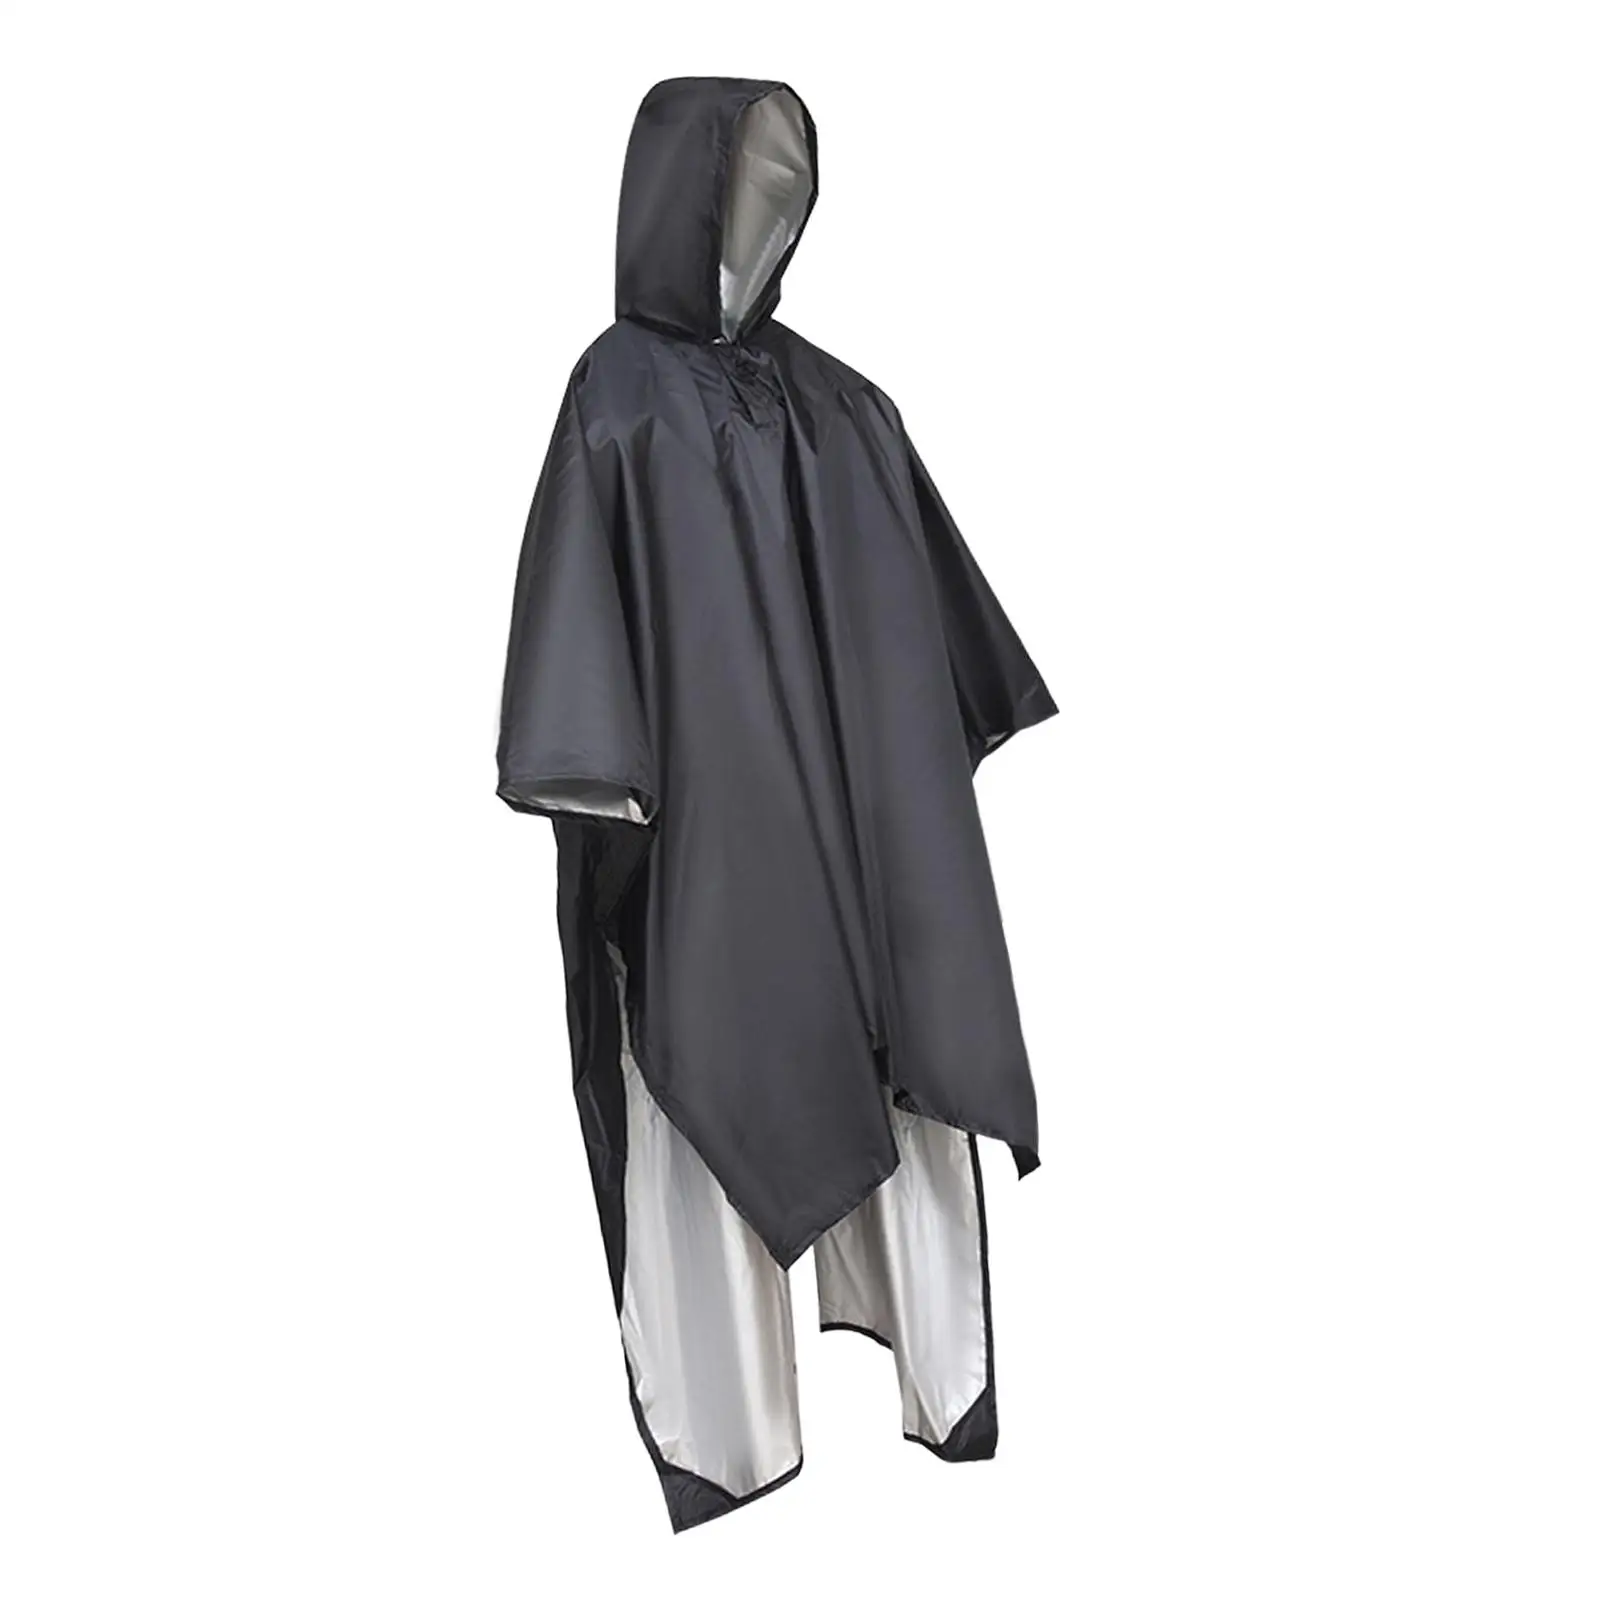 Rain Poncho Tarp Reusable Jacket Raincoat Lightweight Shelter for Adult Unisex Outdoor